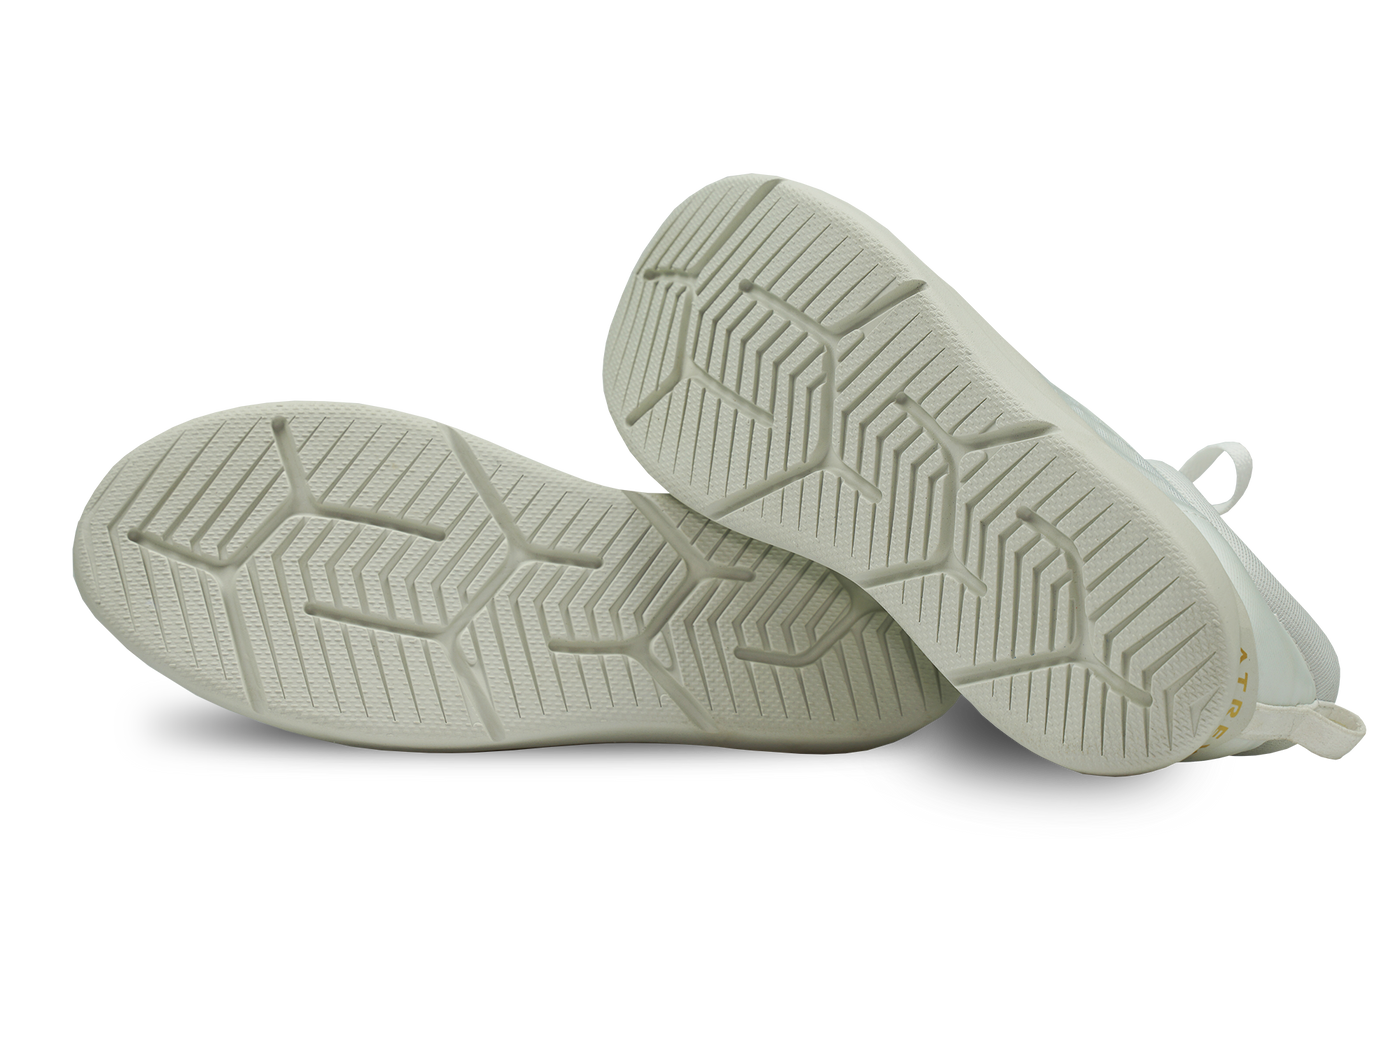 Atreyu Base Model - Lightweight running shoes pair outsoles white